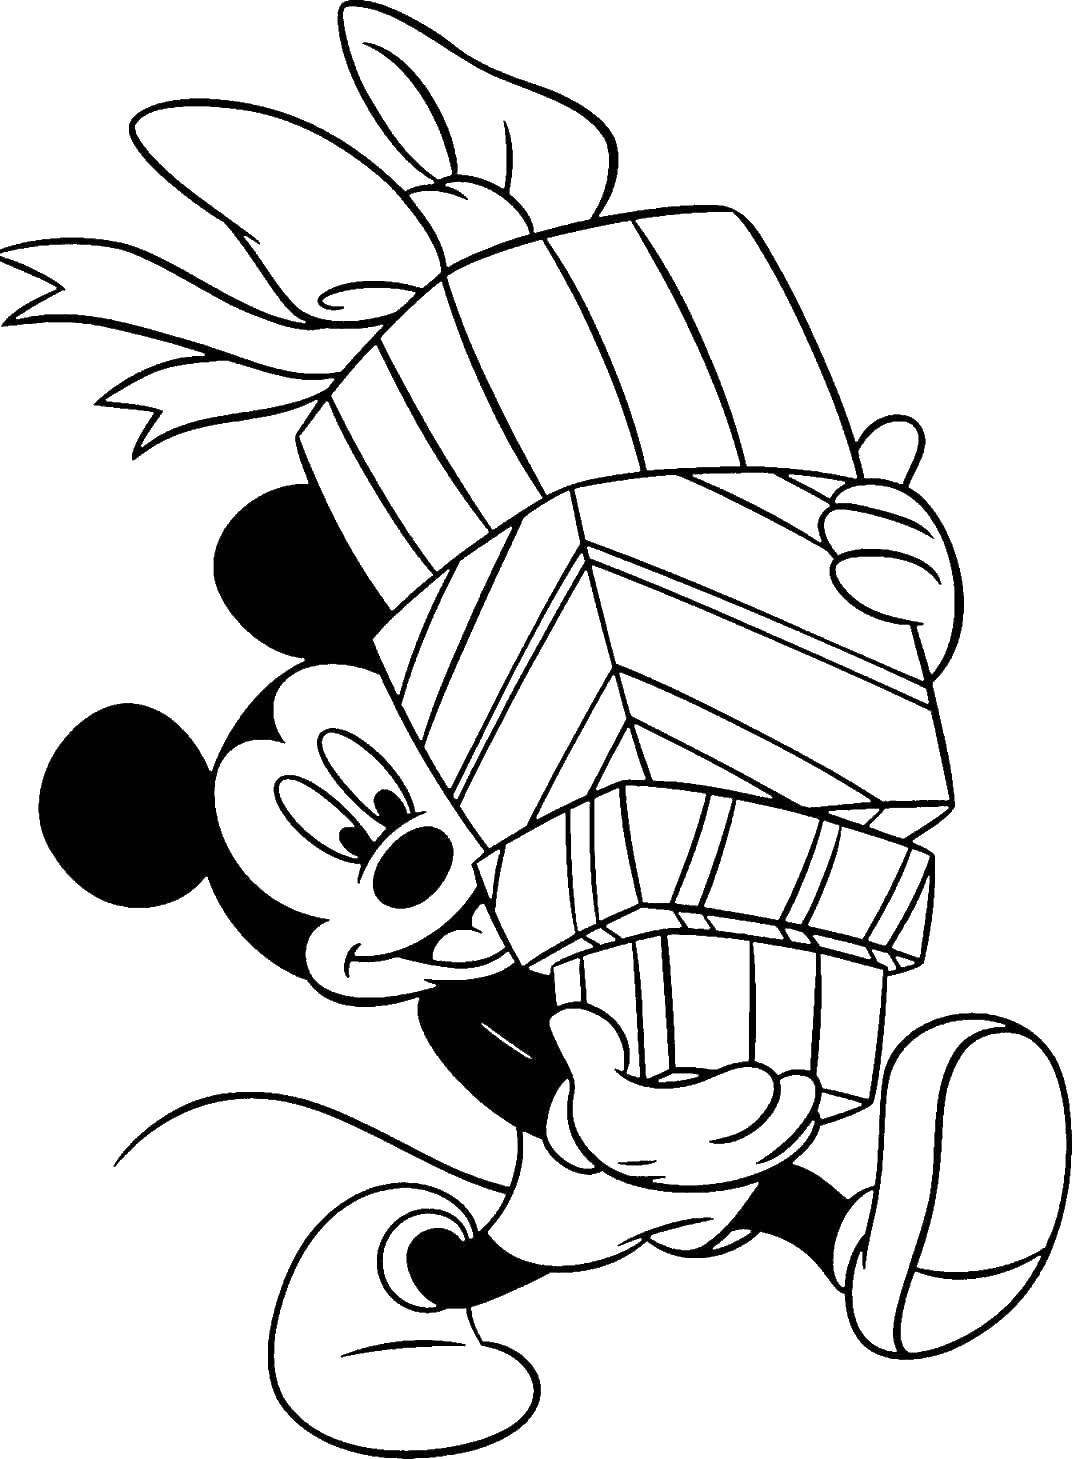 Название: Раскраска Микки маус несёт подарки. Категория: Персонаж из мультфильма. Теги: Дисней, Микки Маус.